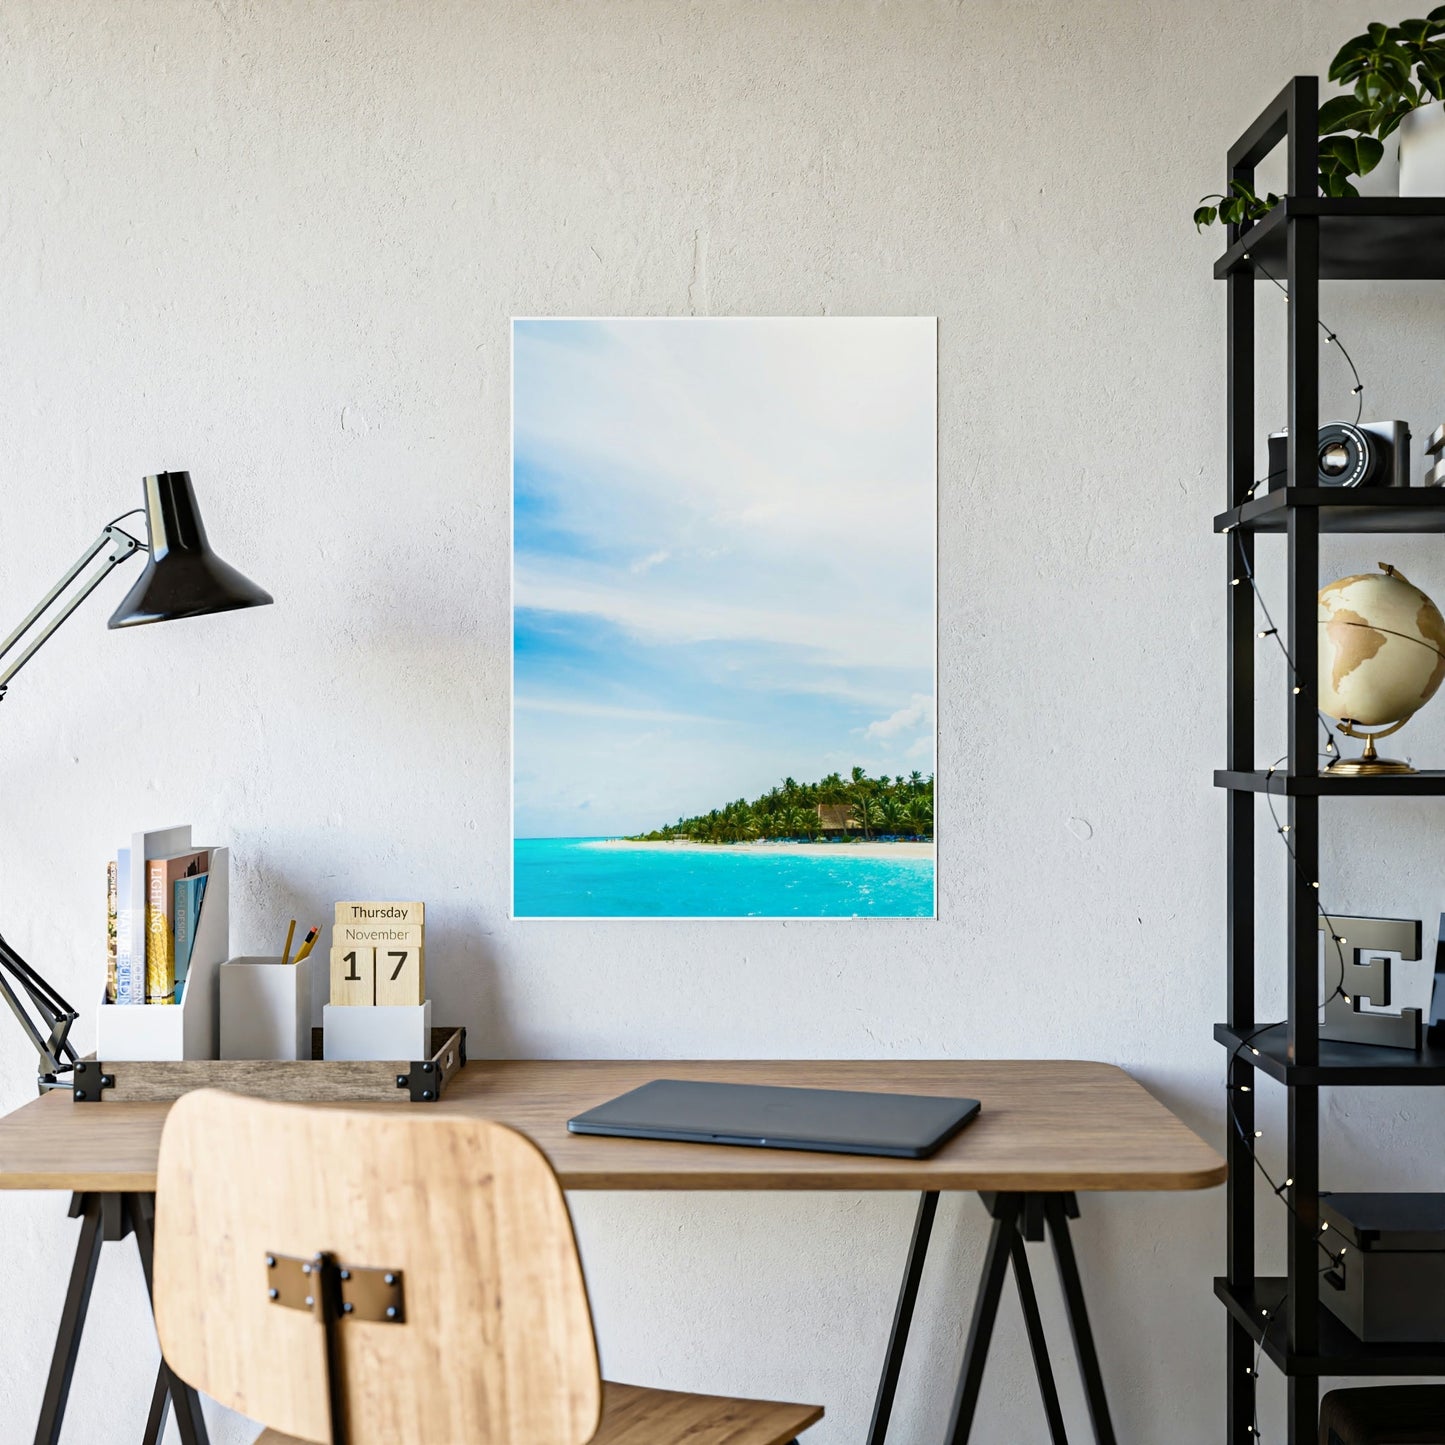 Paradise Found: Framed Canvas of a Scenic Island Beach on a Sunset